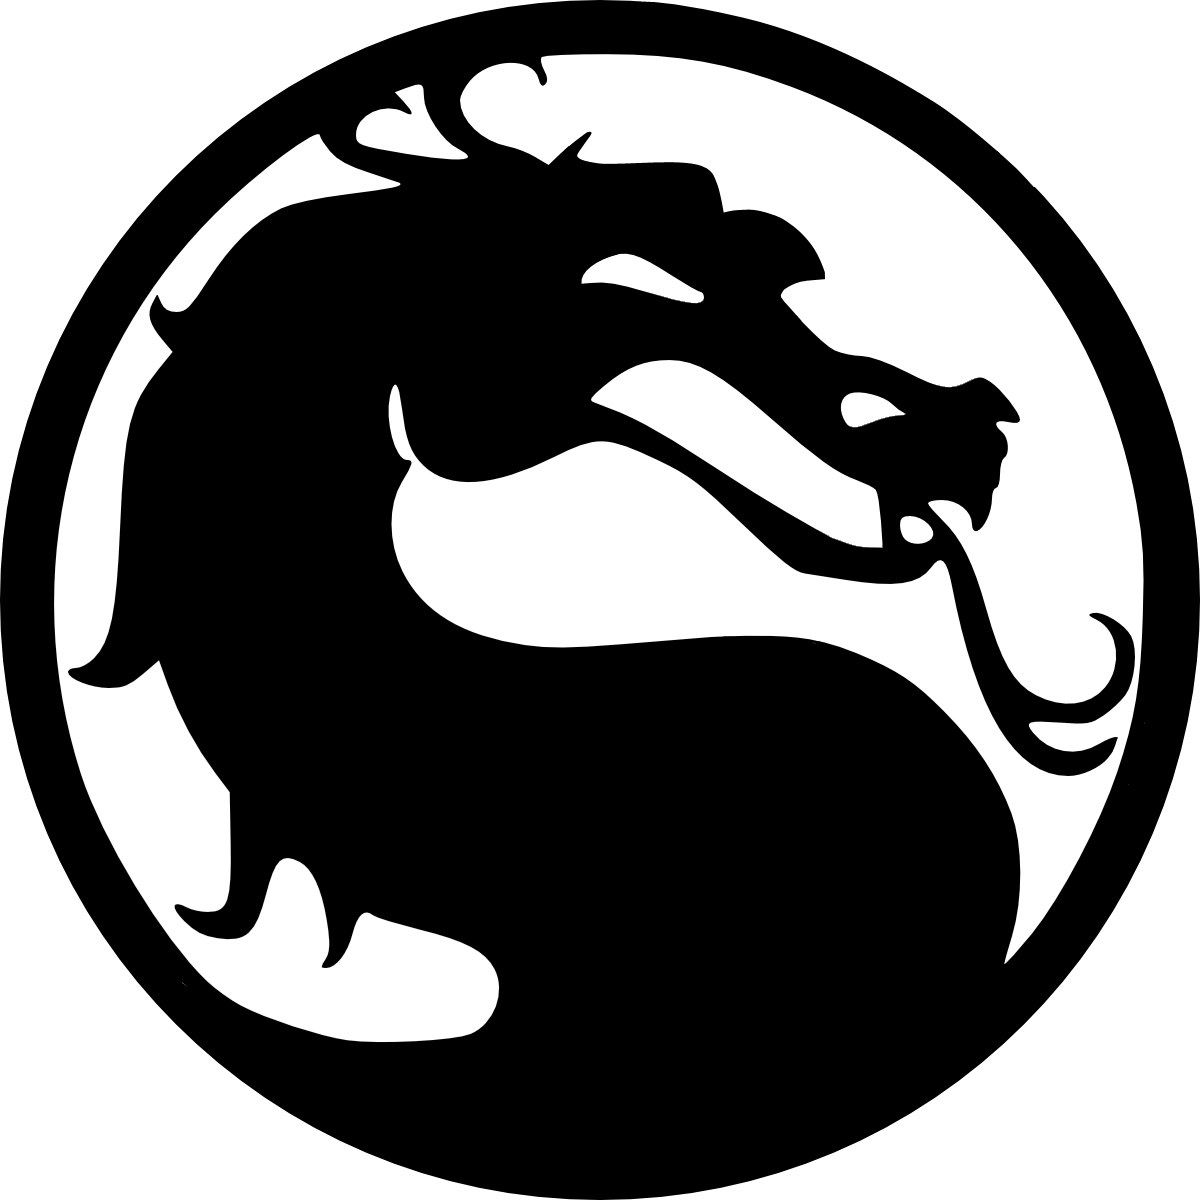 Mortal Kombat logo PNG